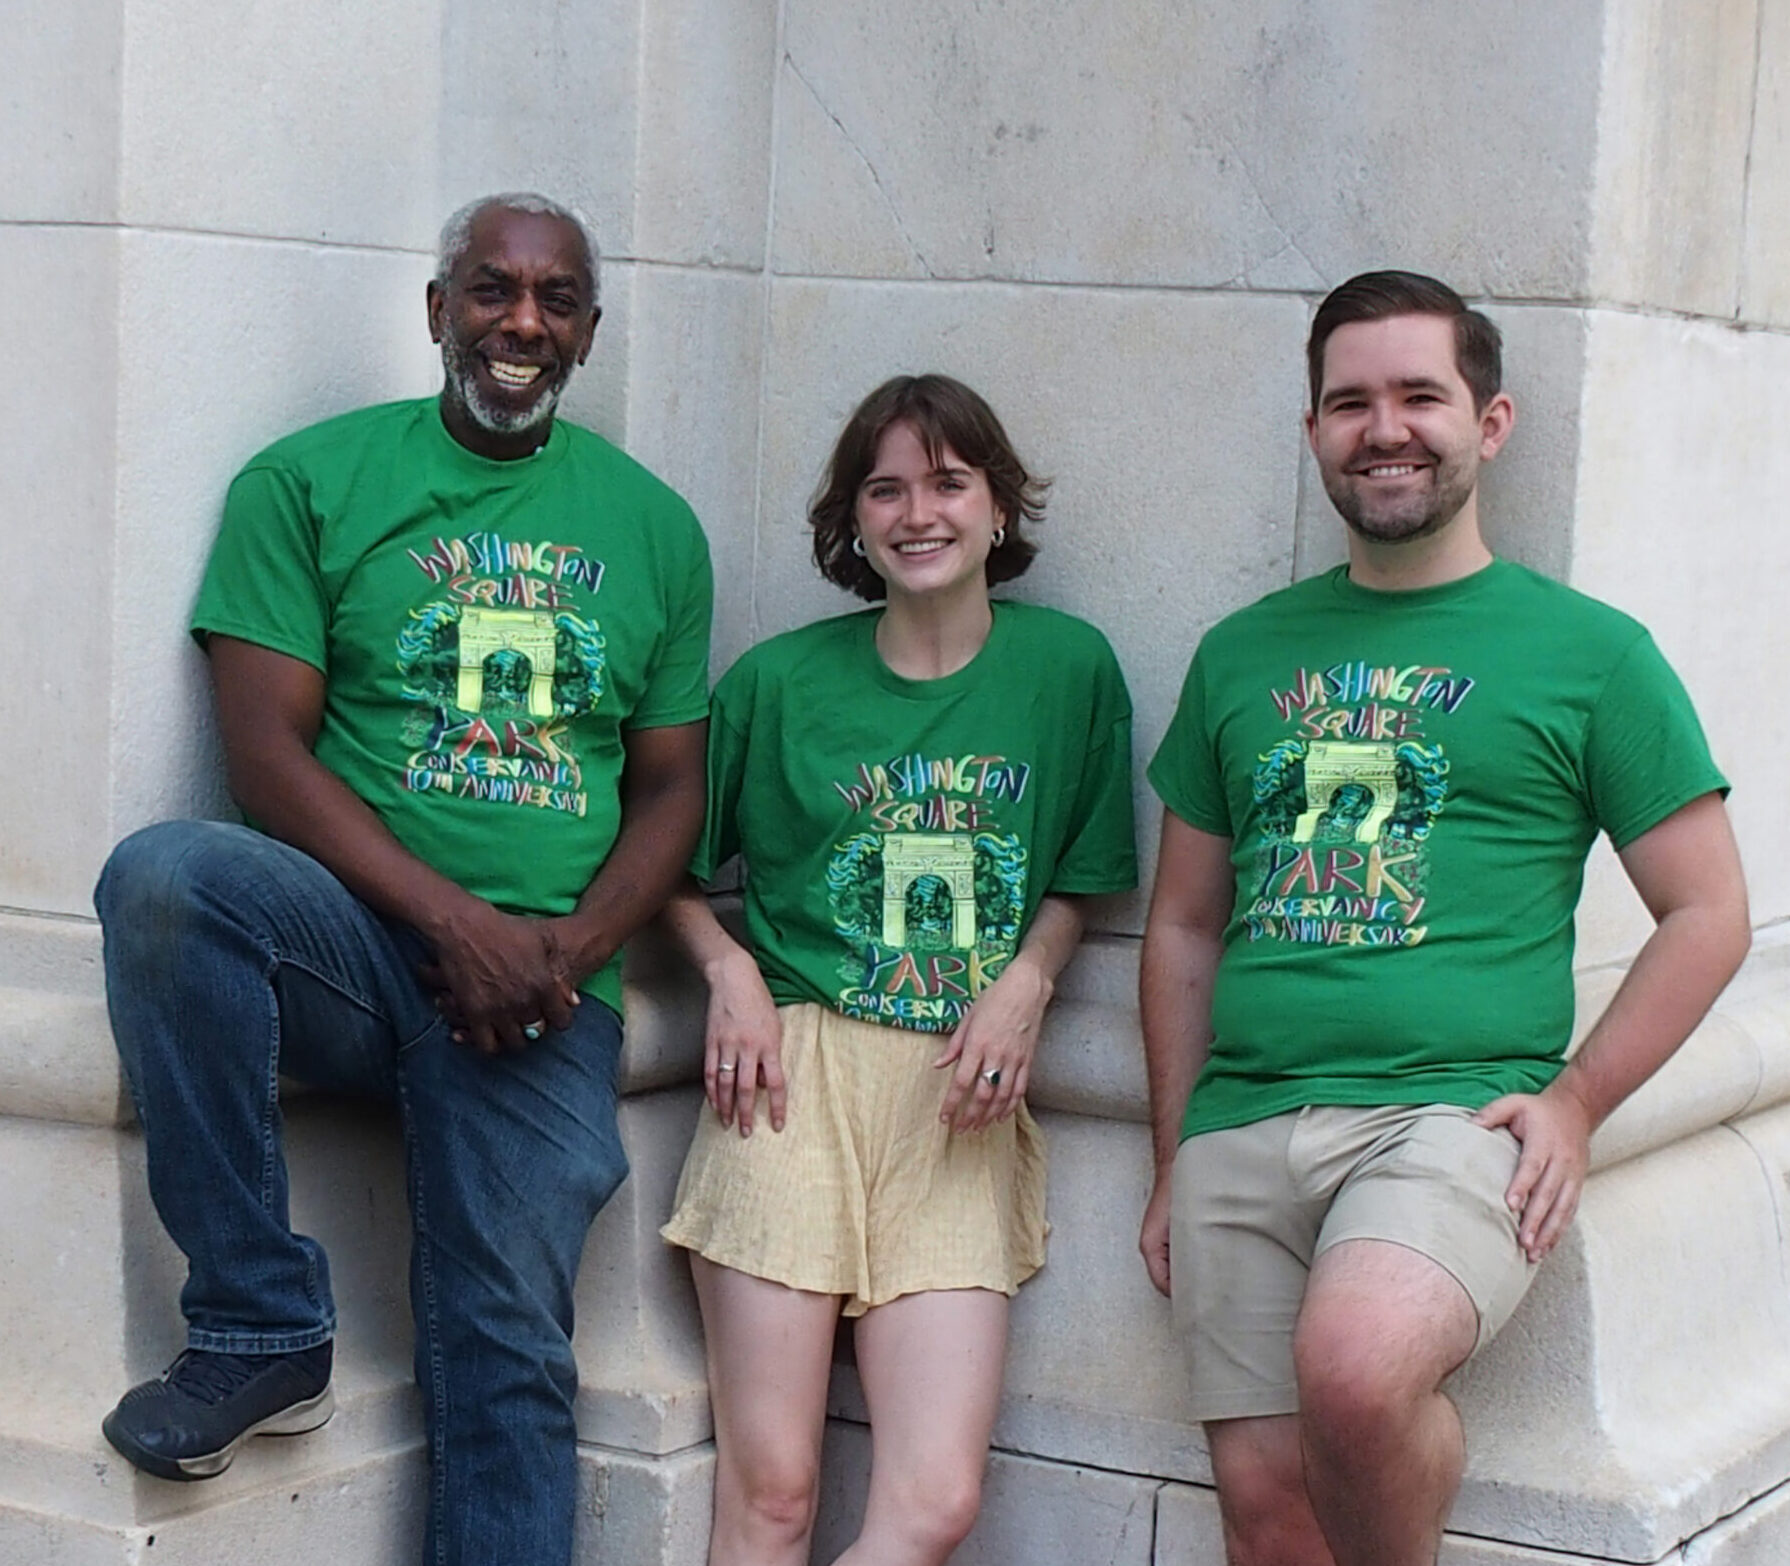 three volunteers wearing green washington square park shirts posing and smiling